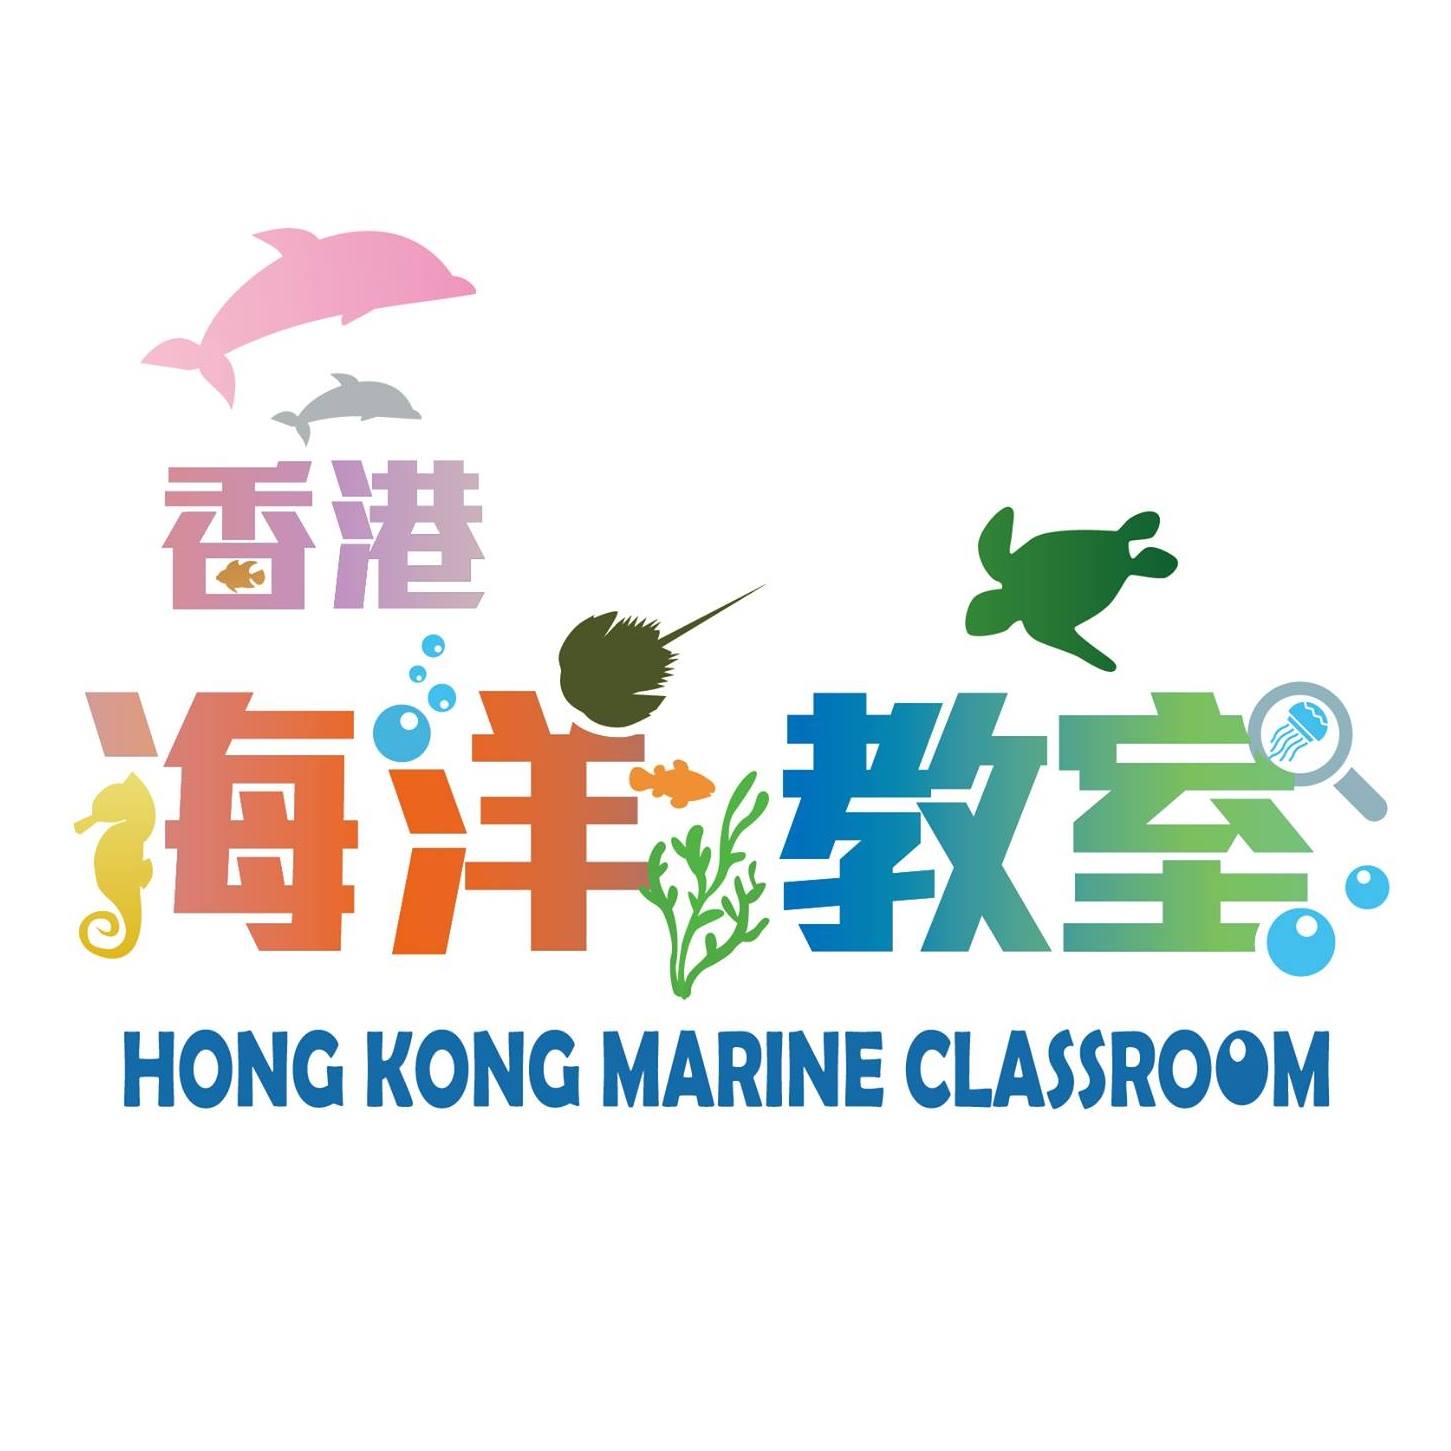 HK Marine Classroom